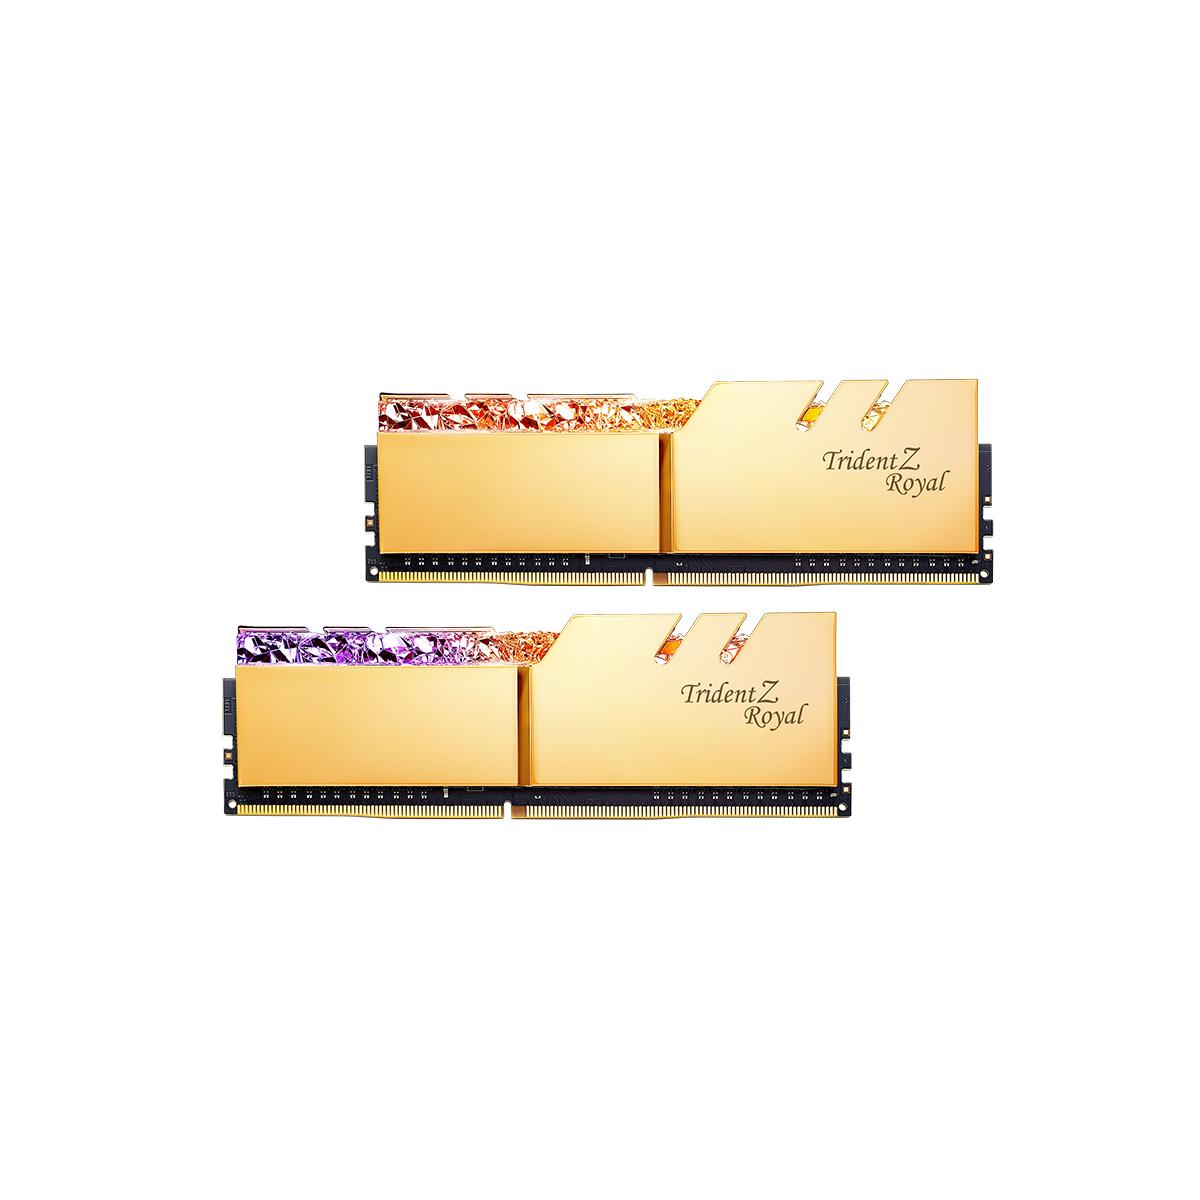 MEMORIA DIMM DDR4 G.SKILL (F4-3600C18D-16GTRG) 16GB (2X8GB) 3600MHZ, TRIDENT Z ROYAL GOLD - G.SKILL